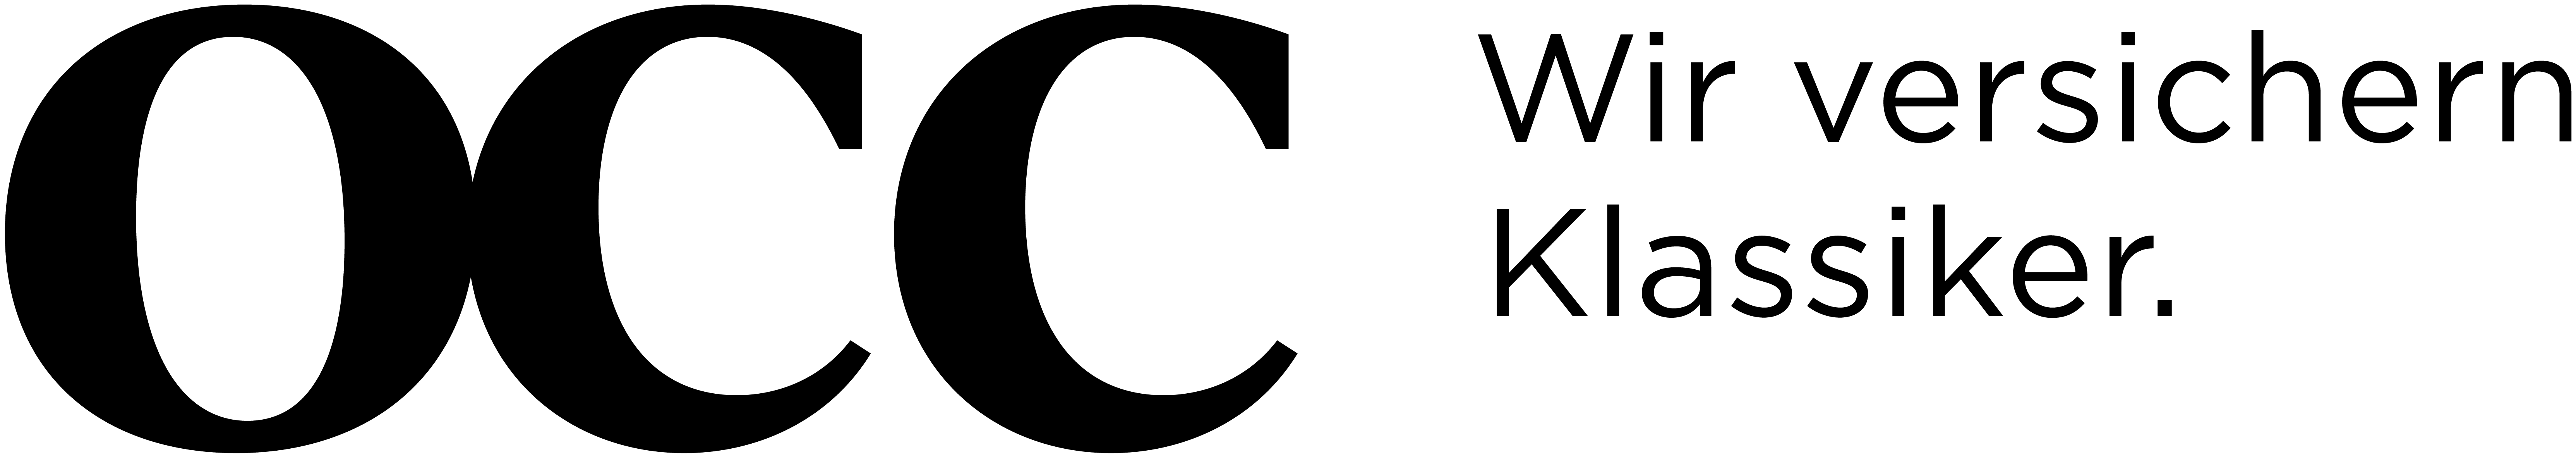 OCC Logo RGB p mc